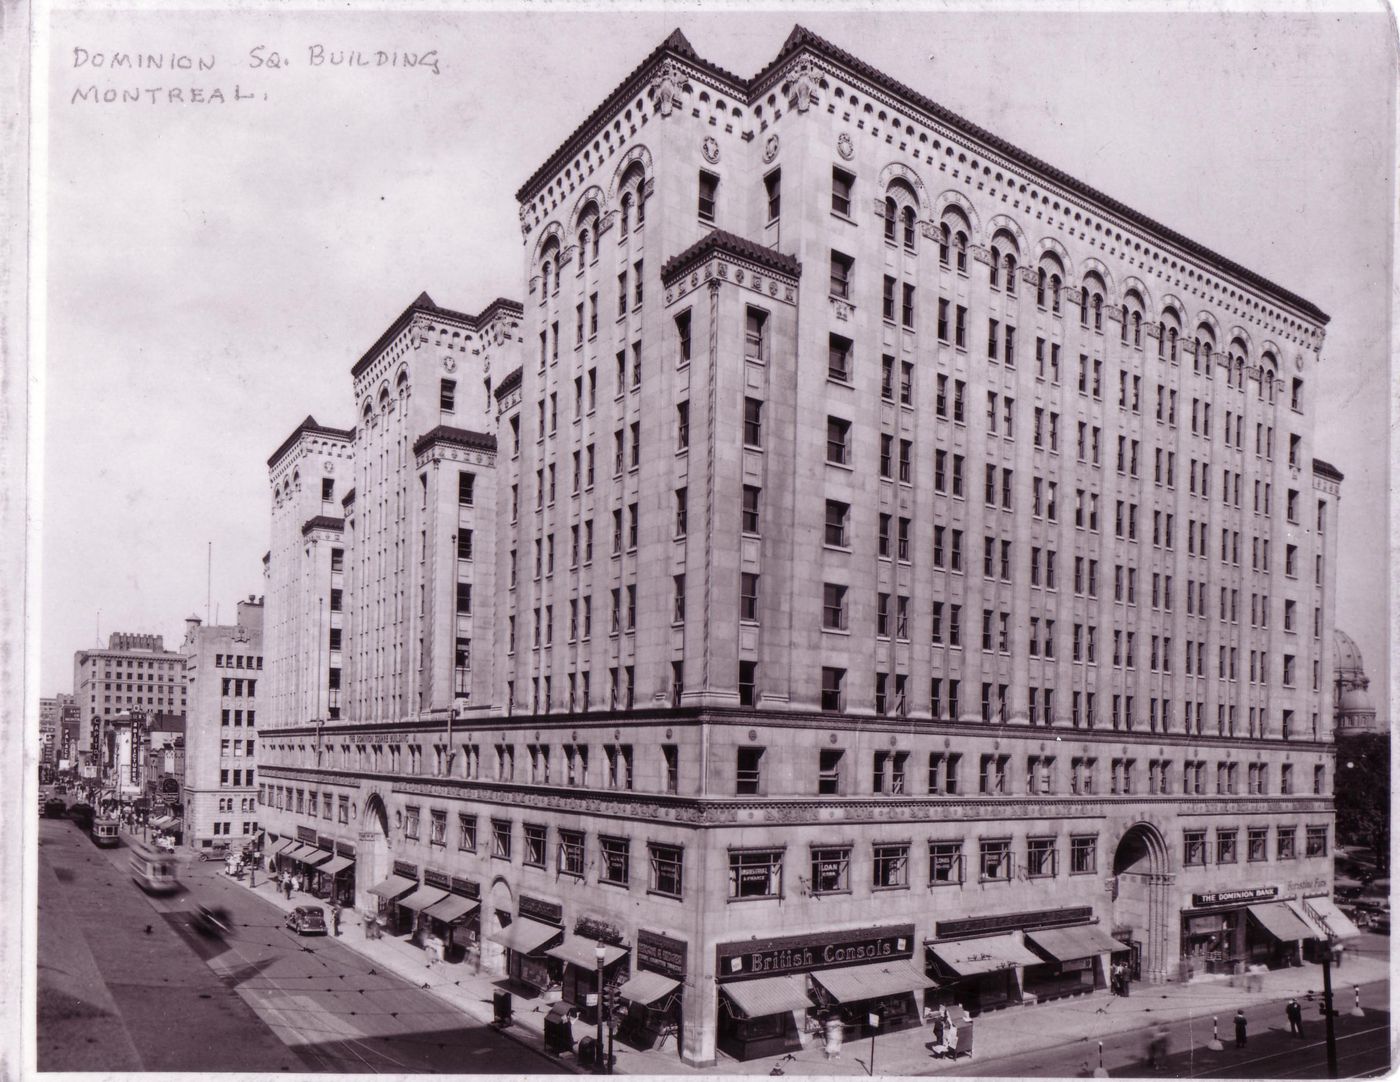 Dominion Square Building, Saint Catherine Street and Peel Street facades